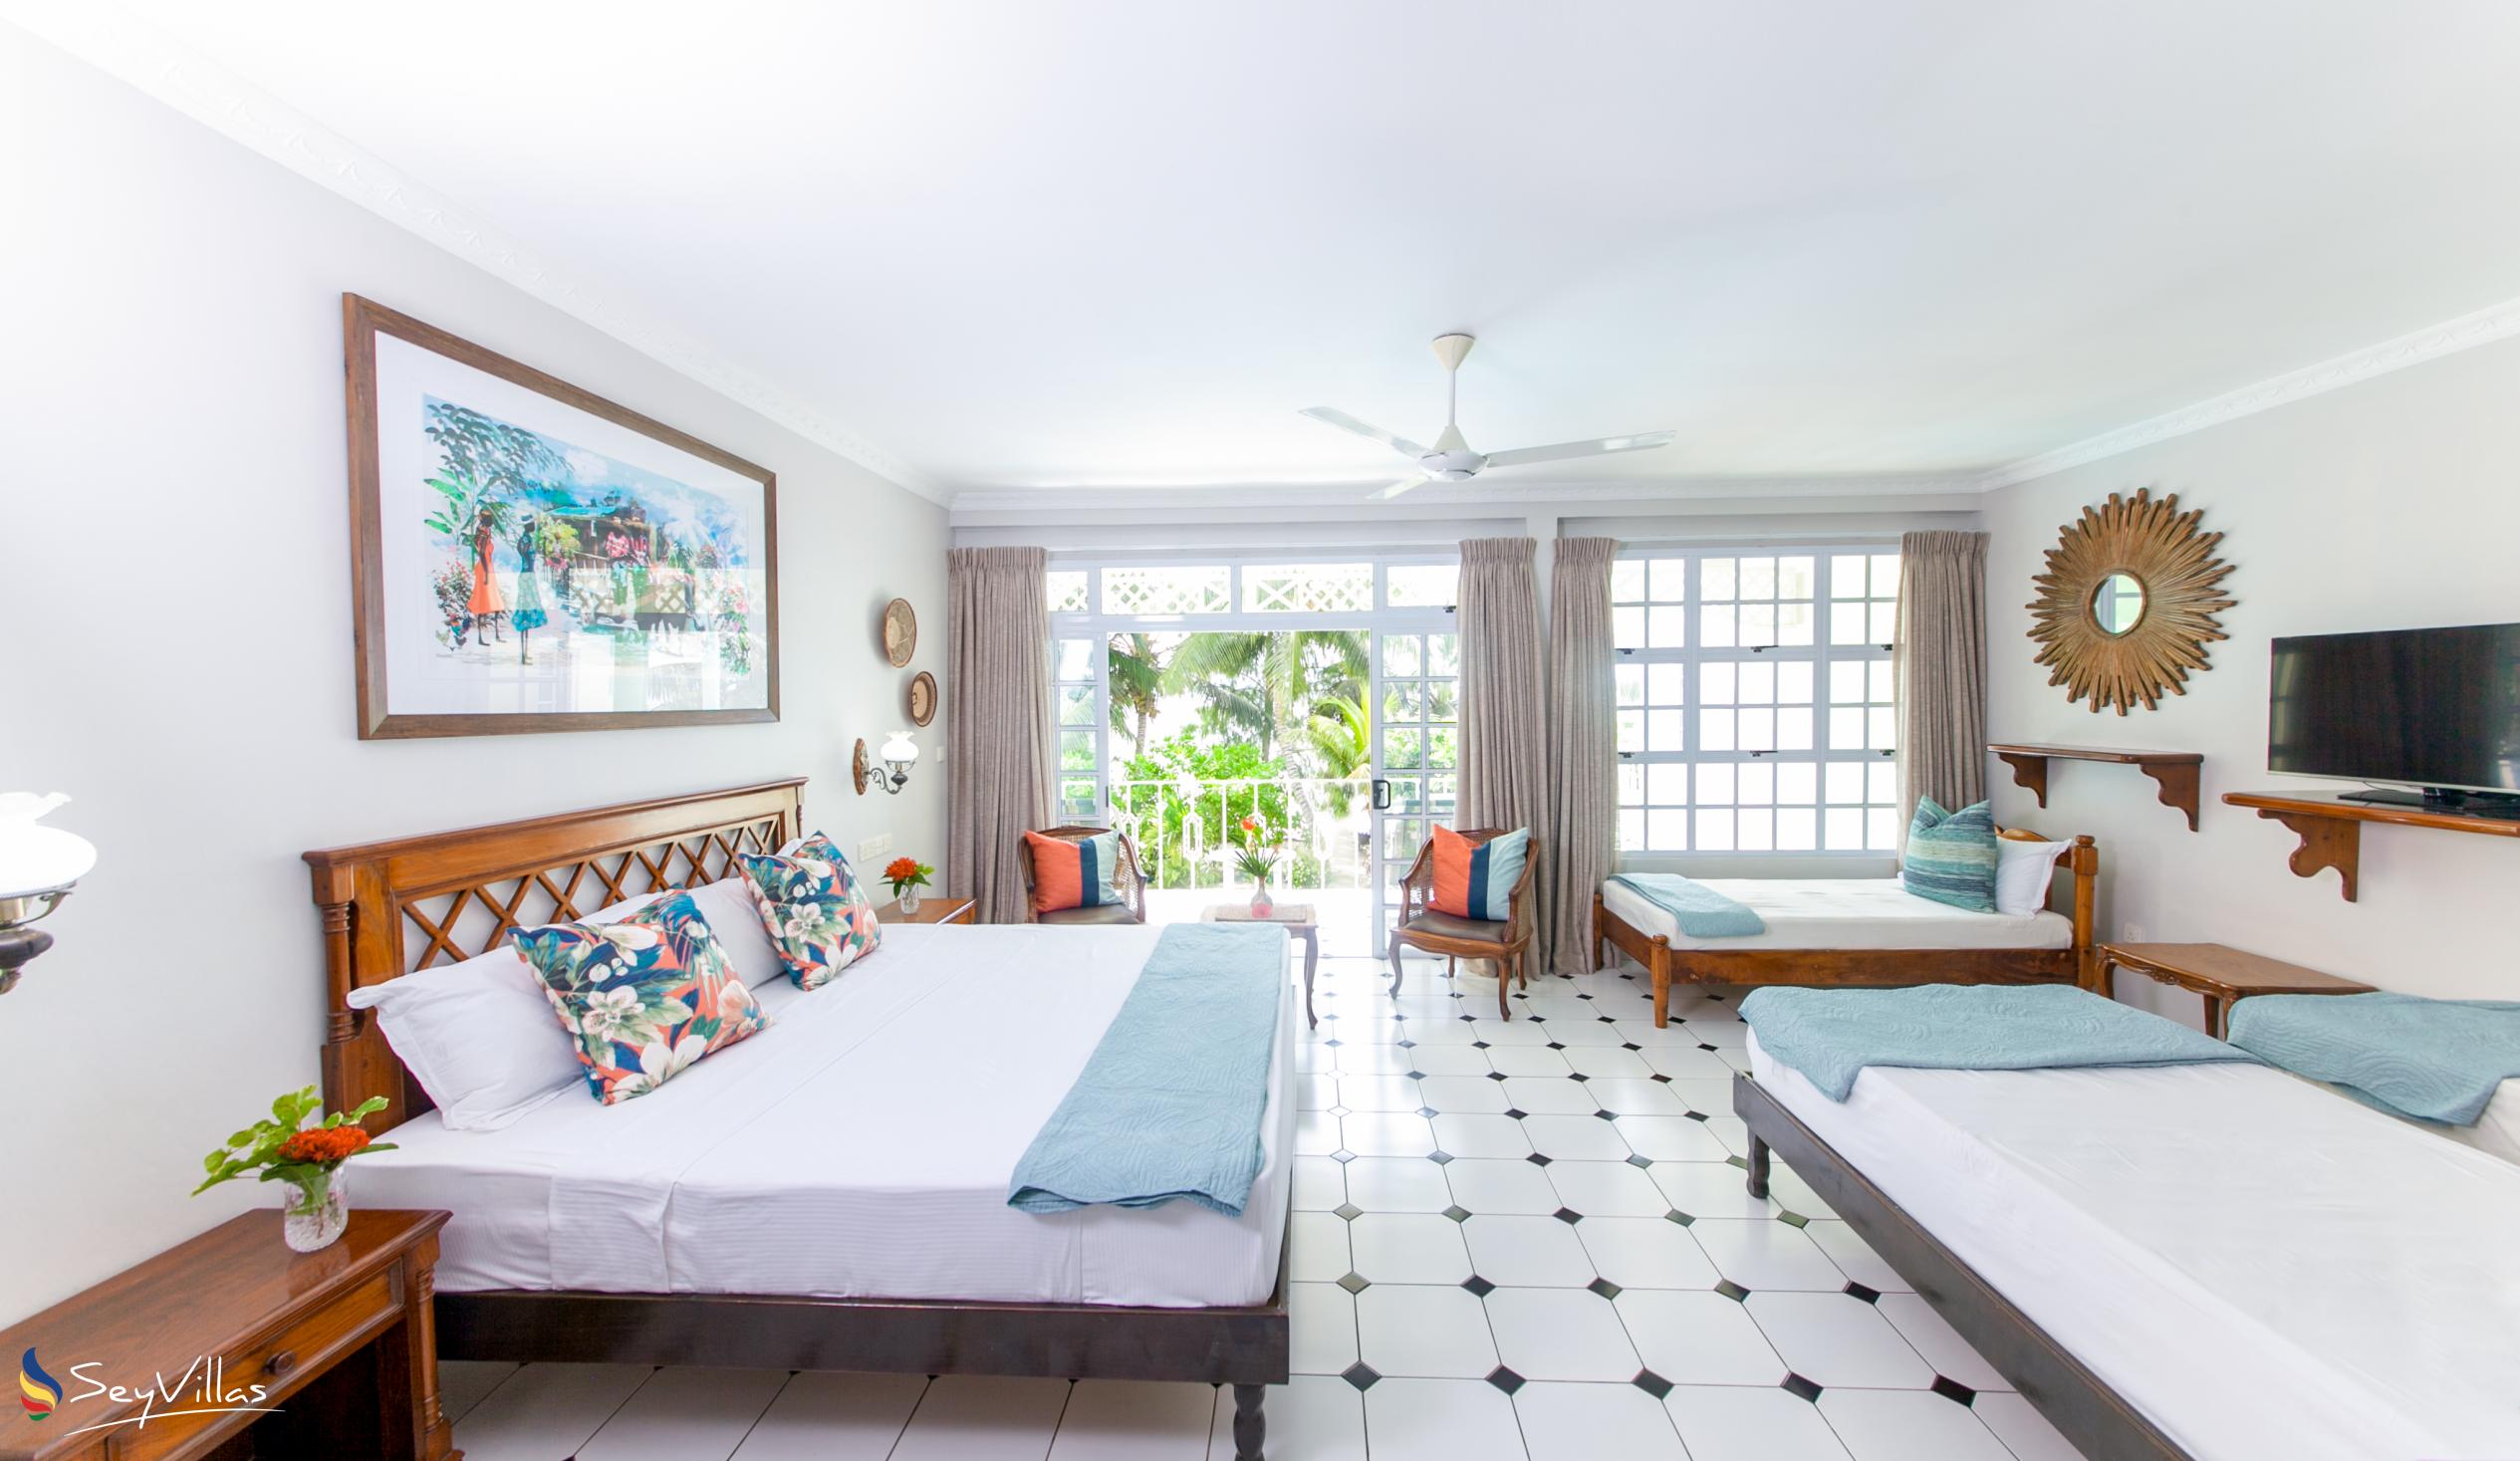 Foto 31: Palm Beach Hotel - Camera Familiare - Praslin (Seychelles)